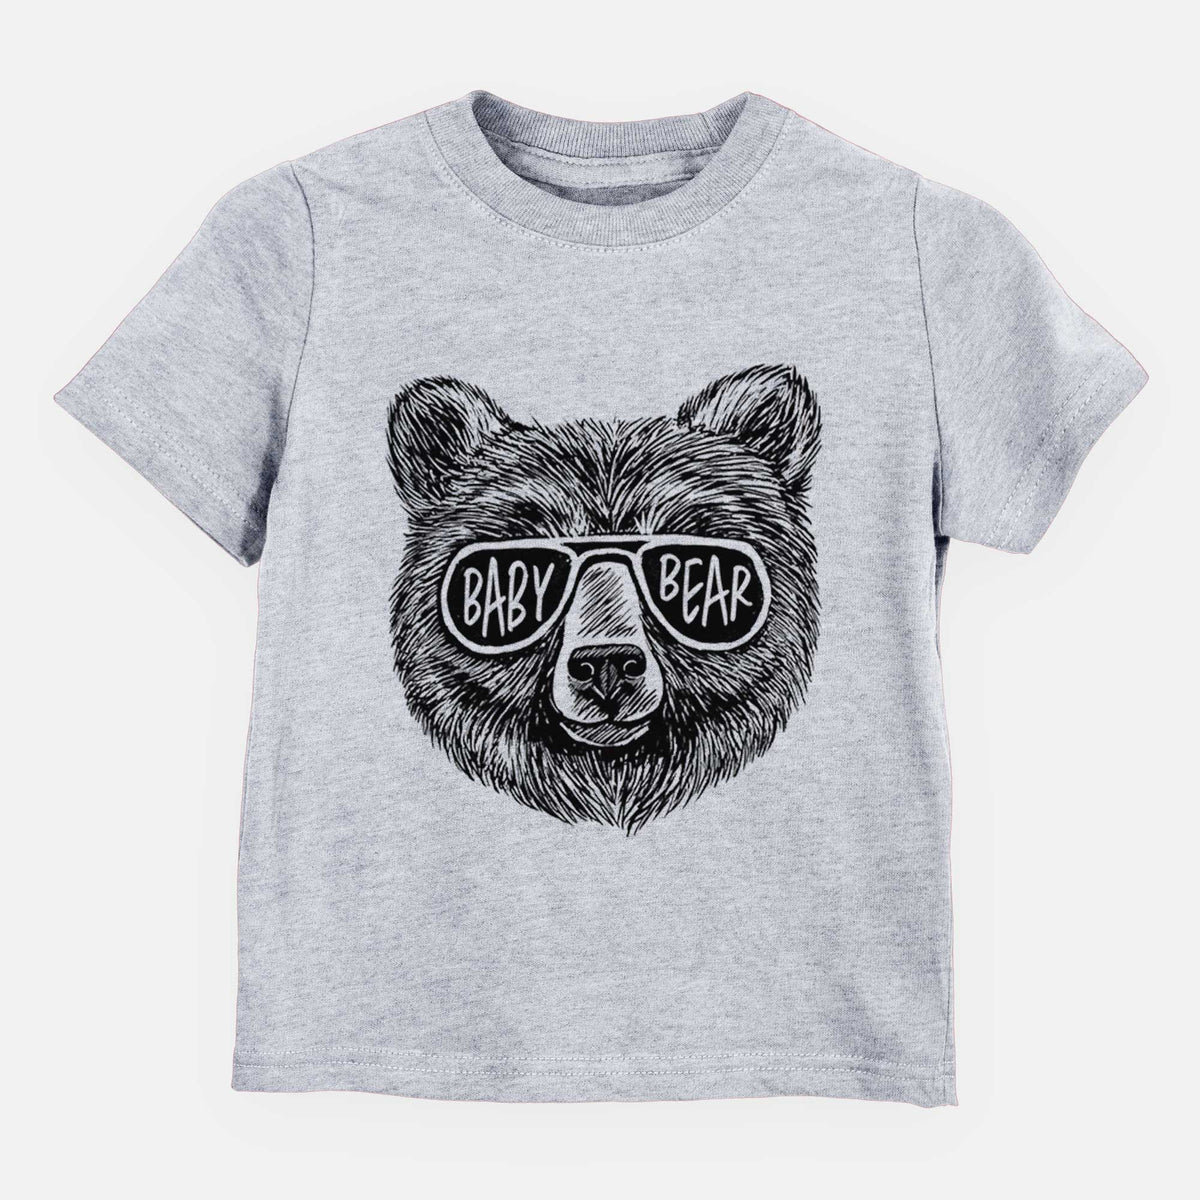 Baby Bear - Kids Shirt